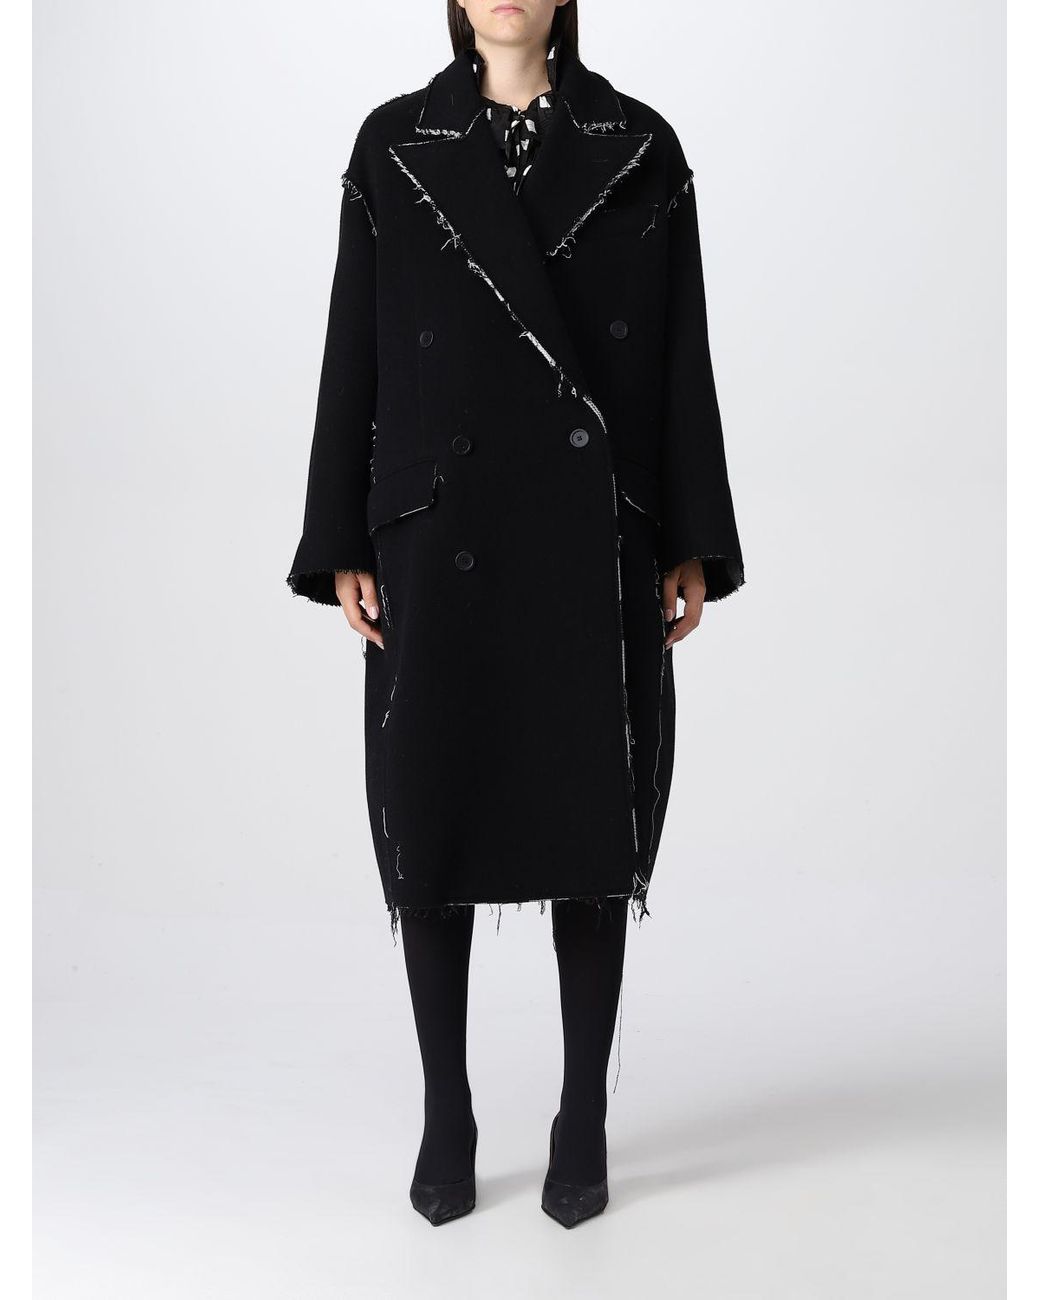 Balenciaga Oversize Wool Coat in Black | Lyst